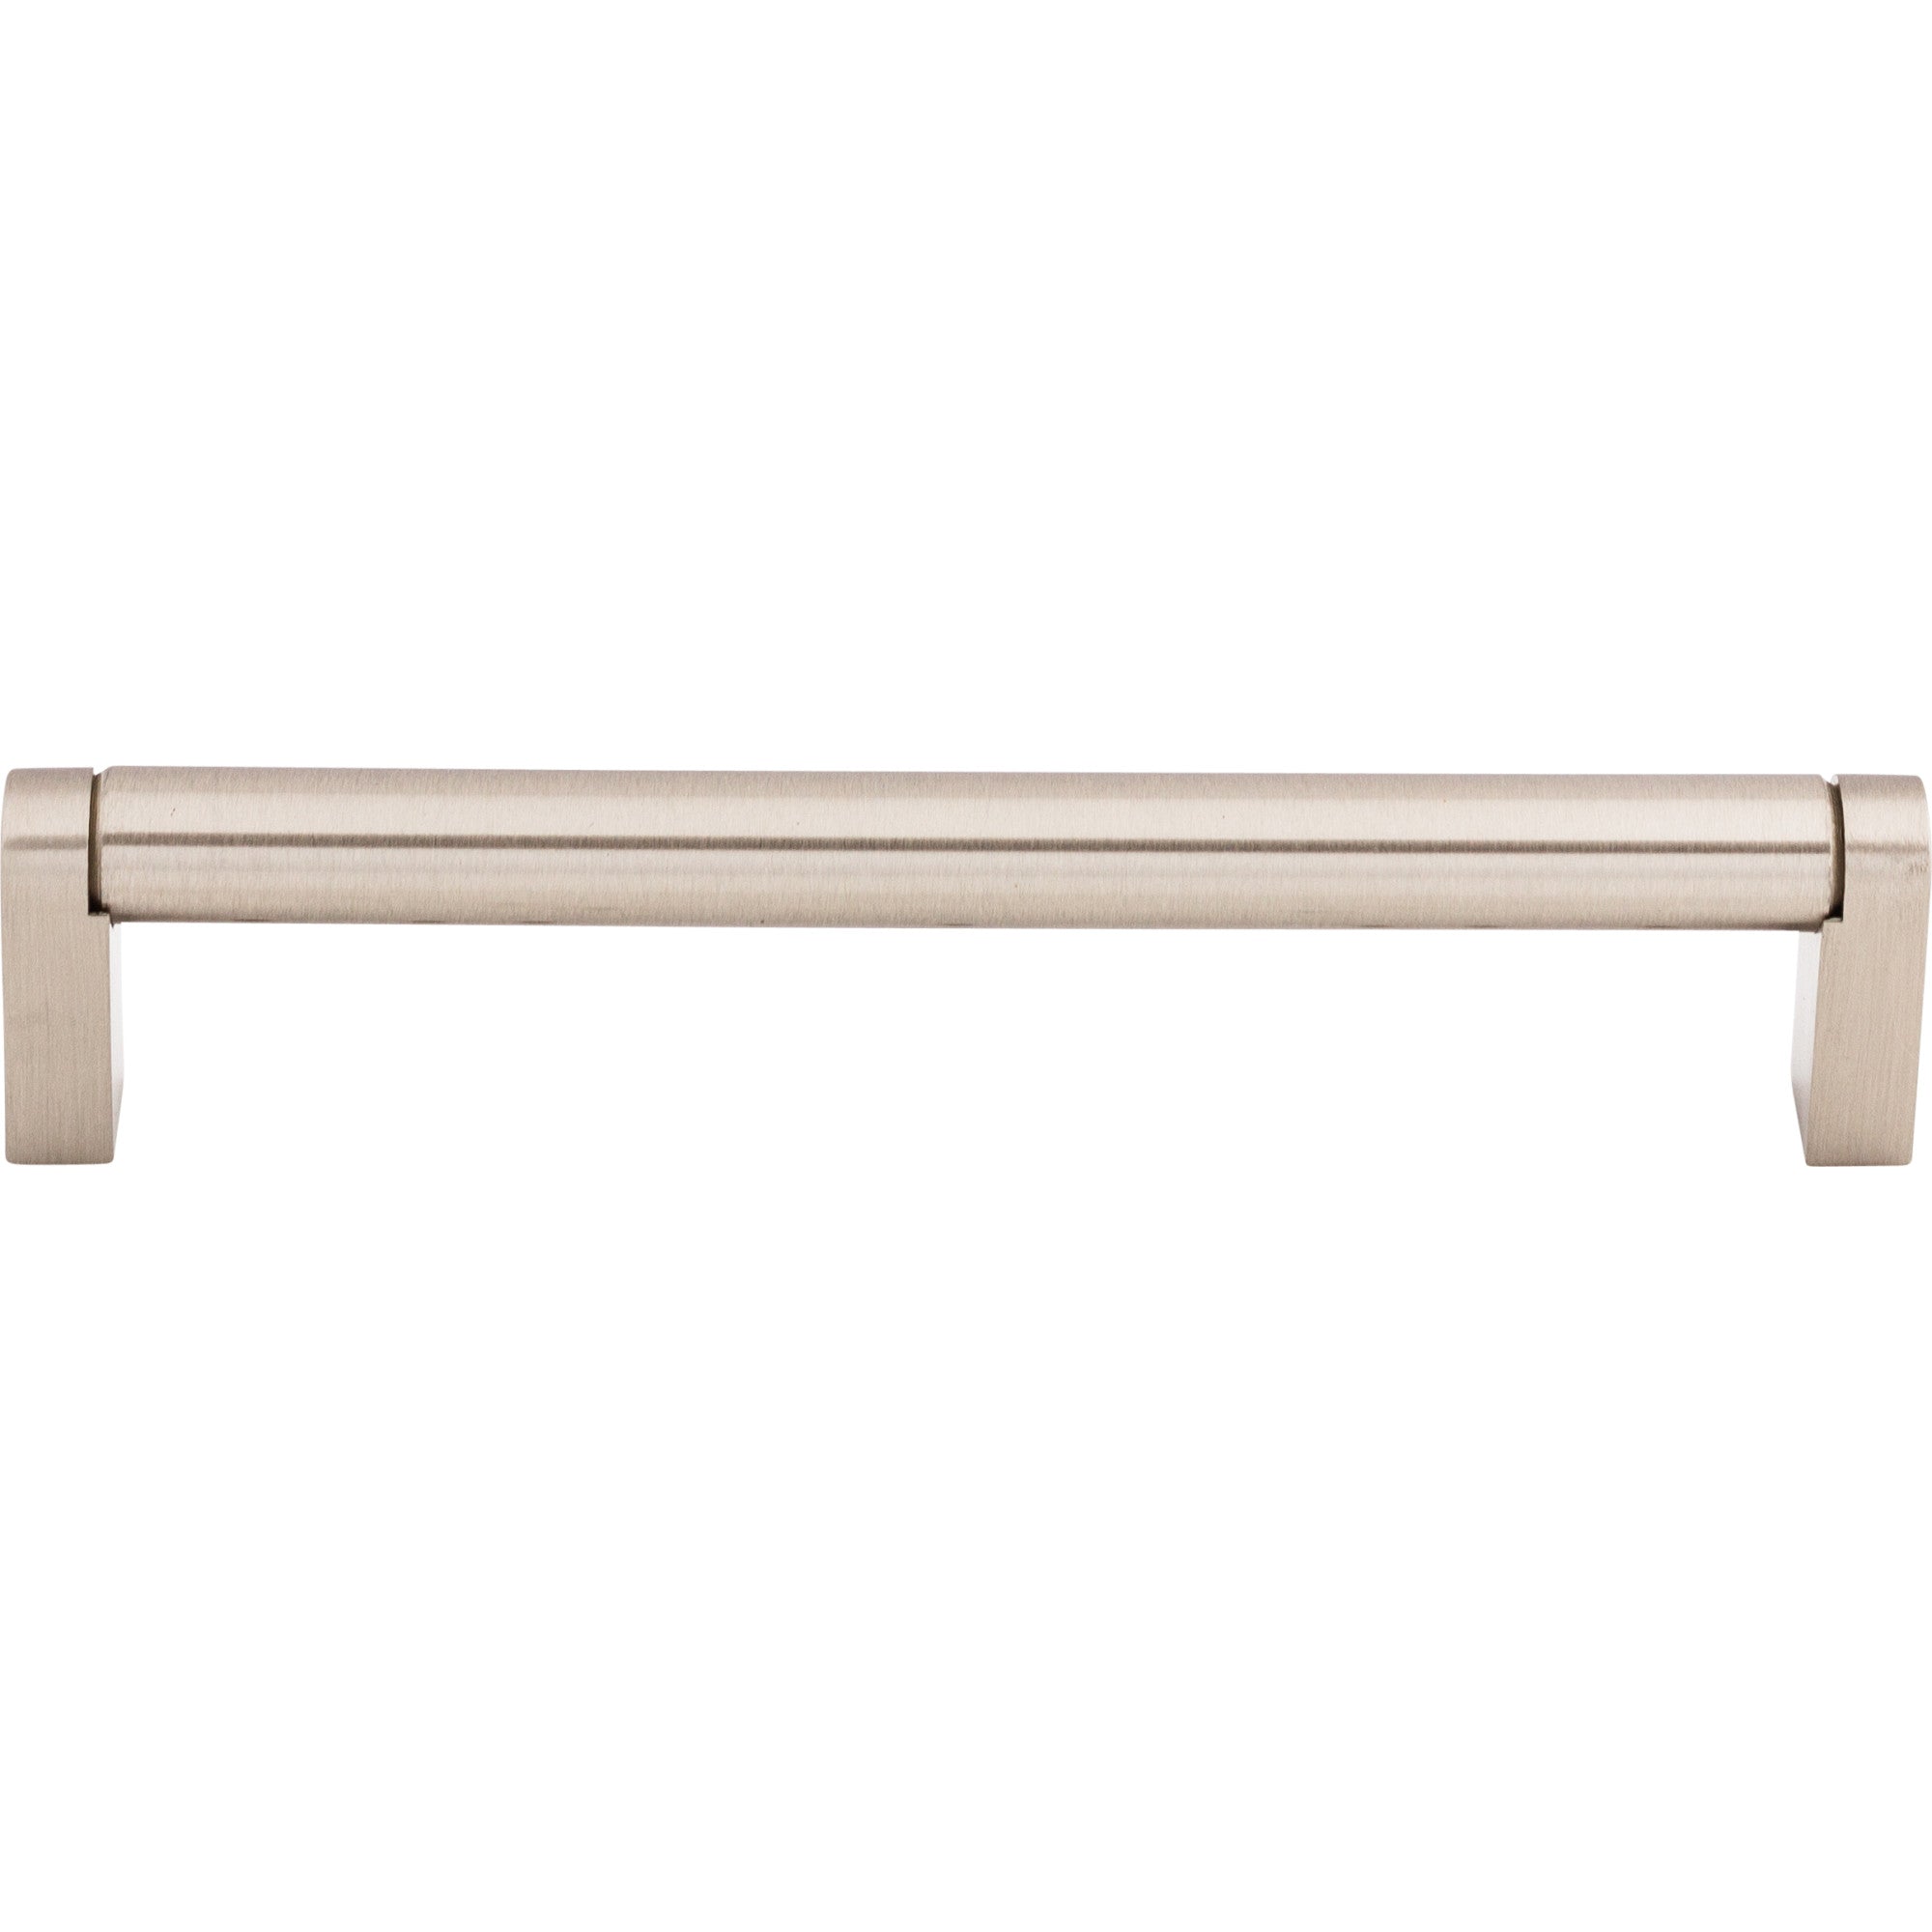 Top Knobs - Hardware - Pennington Bar Pull - Polished Chrome - Union Lighting Luminaires Décor